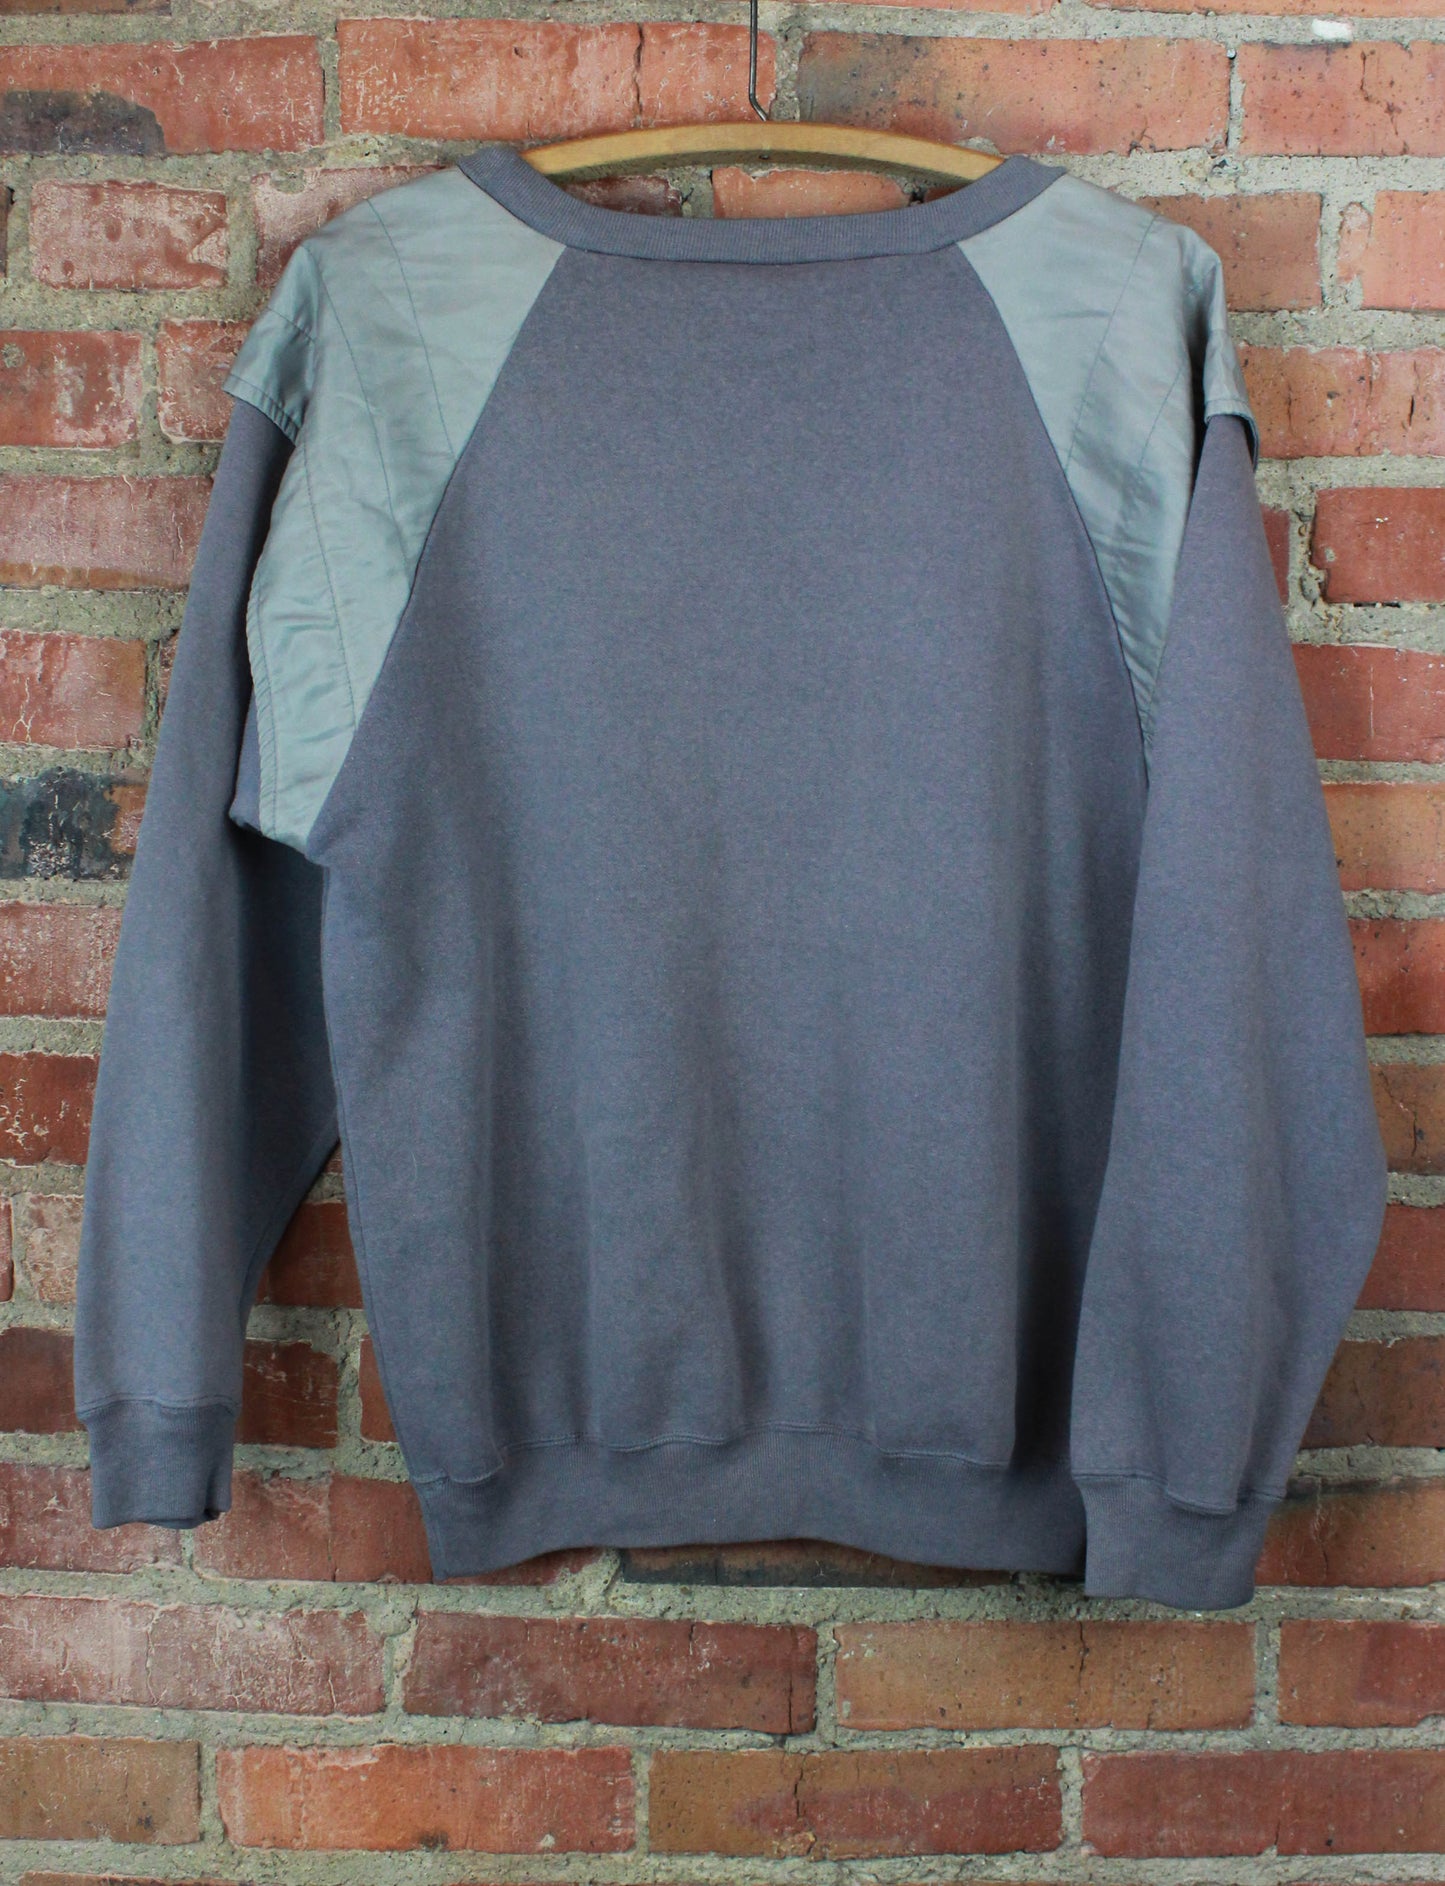 Vintage 80's G-Line Graphic Sweatshirt Crew Neck Pullover Embellished Grey Unisex Large/XL